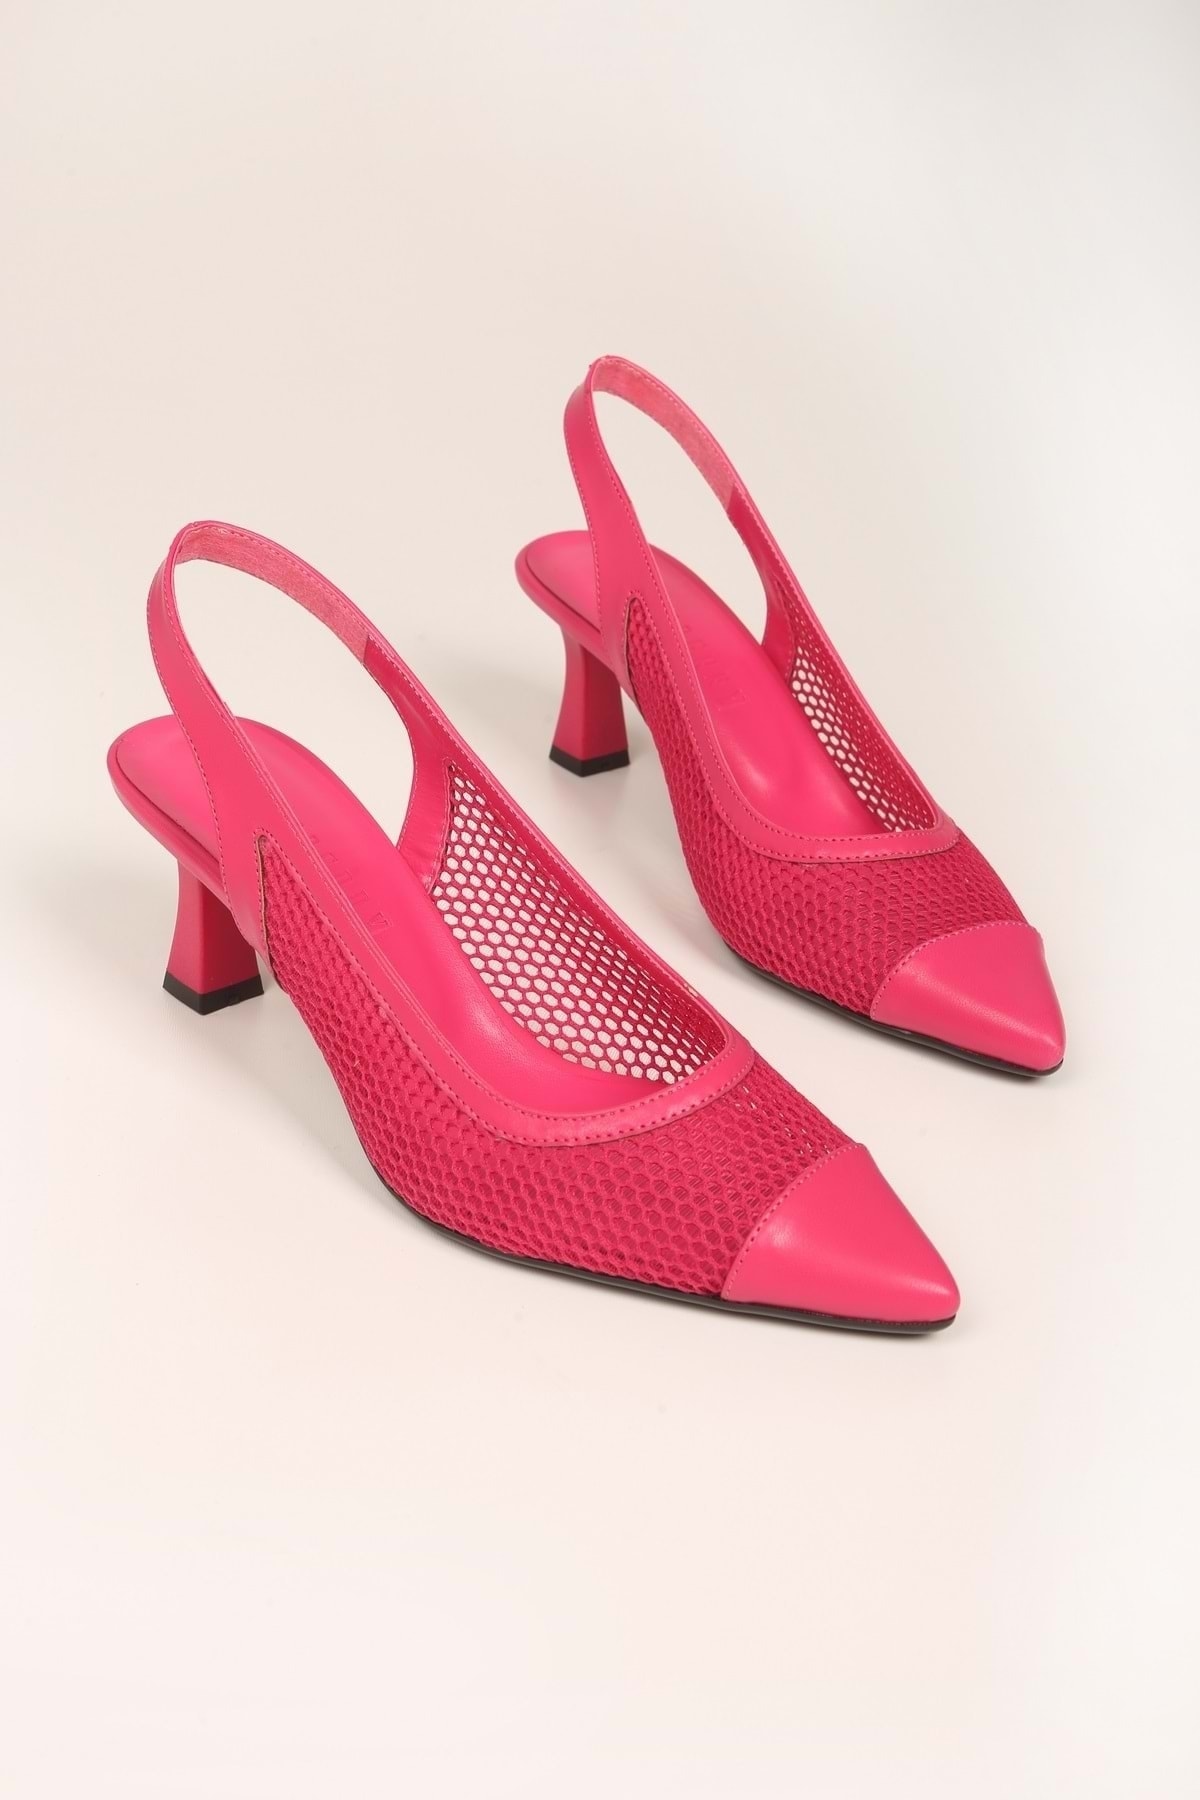 Levně Shoeberry Women's Rella Fuchsia Mesh Heeled Shoes Stiletto